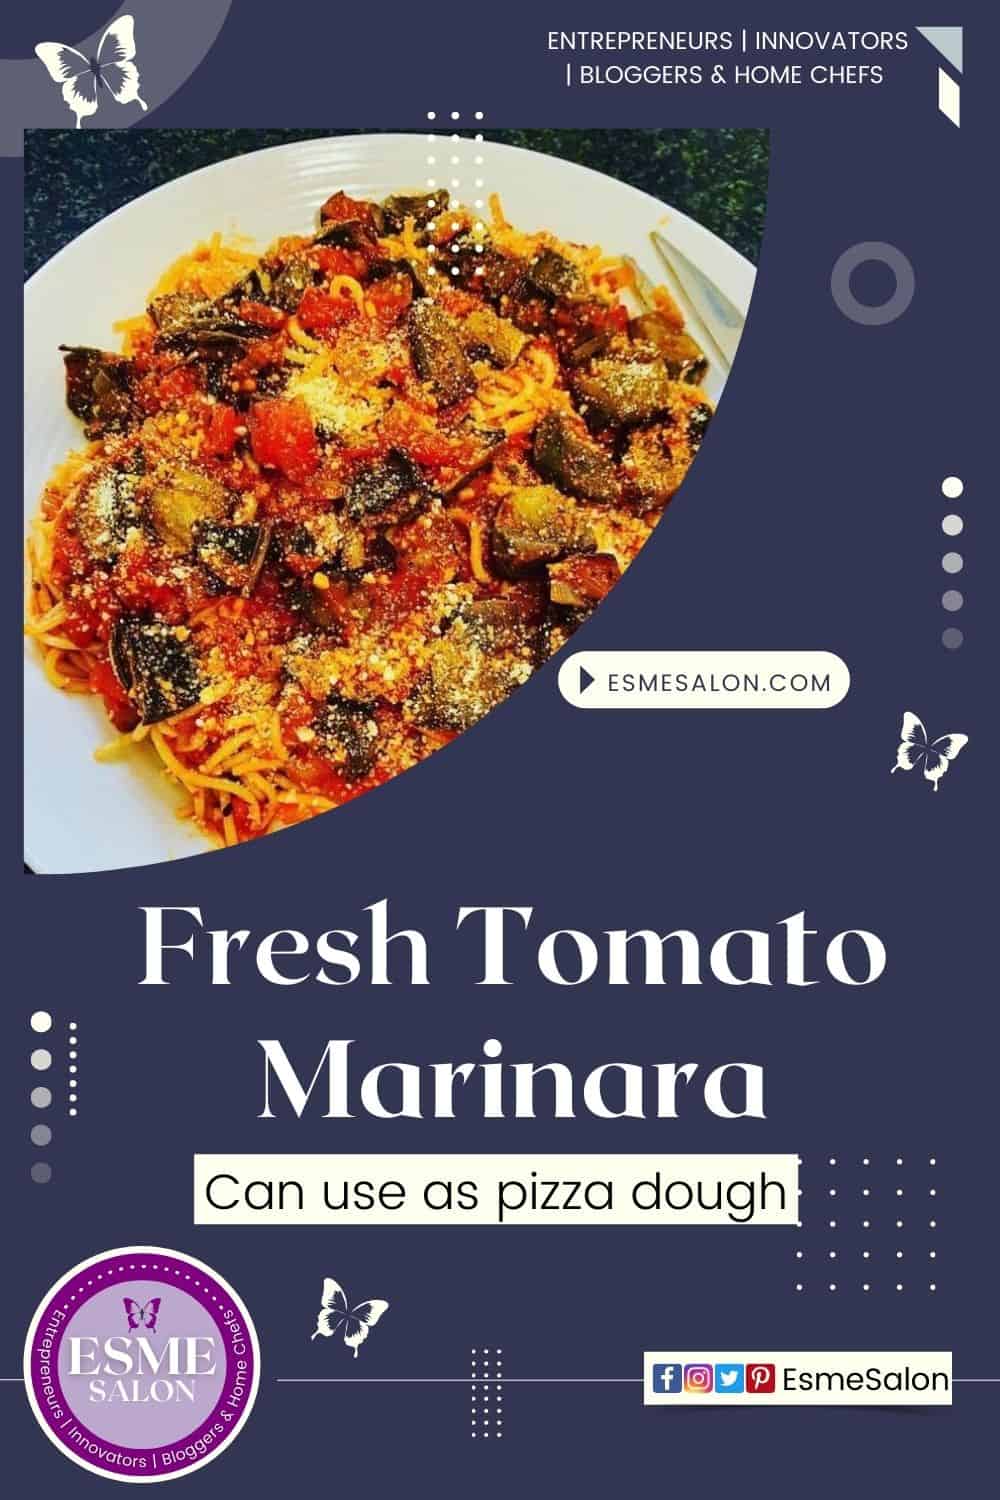 An image with Homemade Marinara/Tomato Sauce on pasta